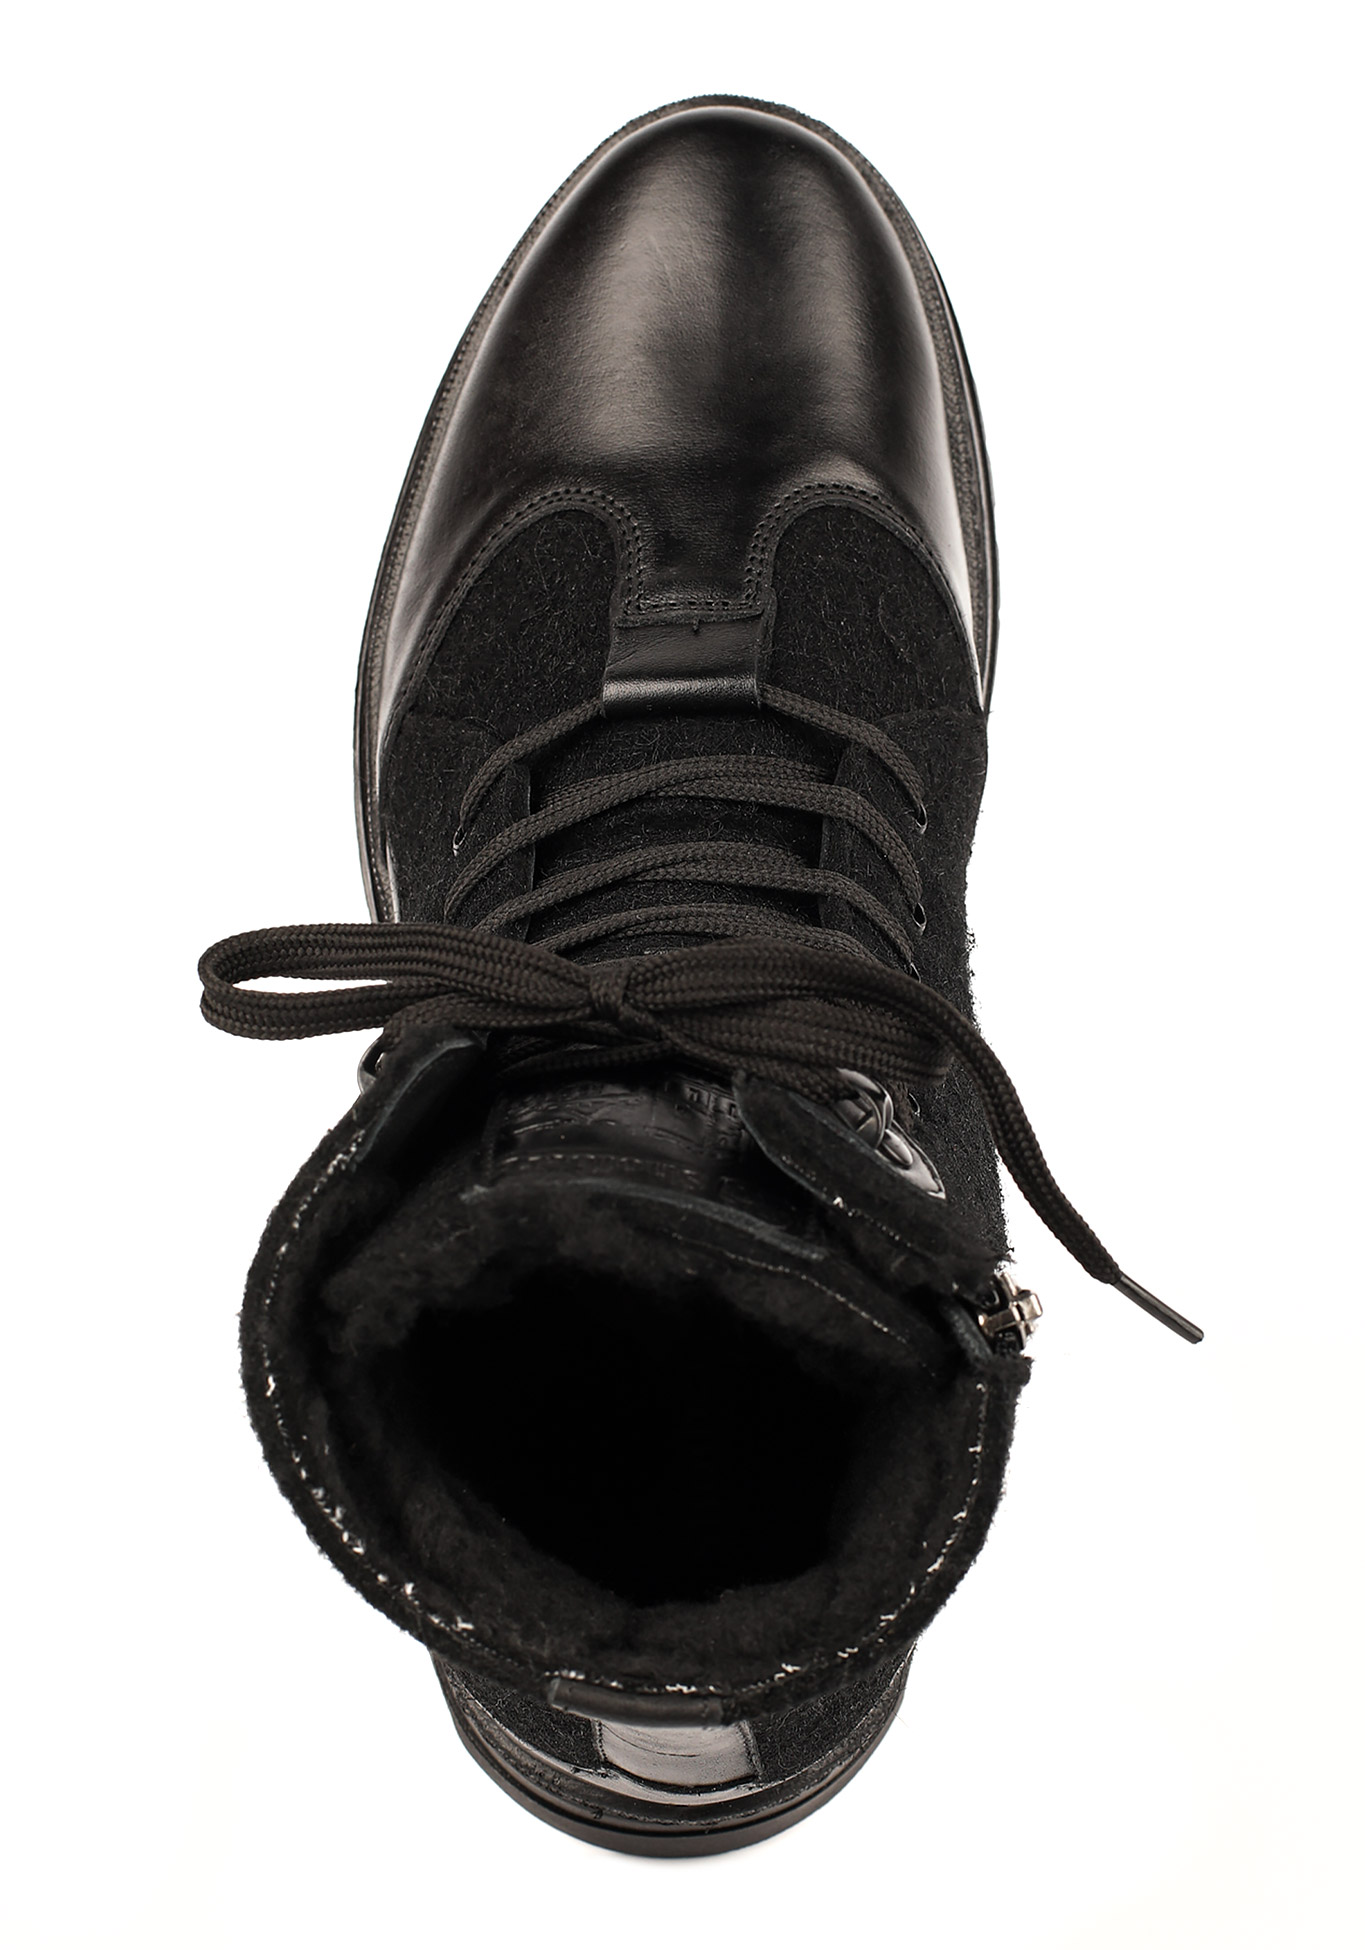 Ботинки мужские "Кален" Shoiberg, размер 42, цвет черный - фото 8